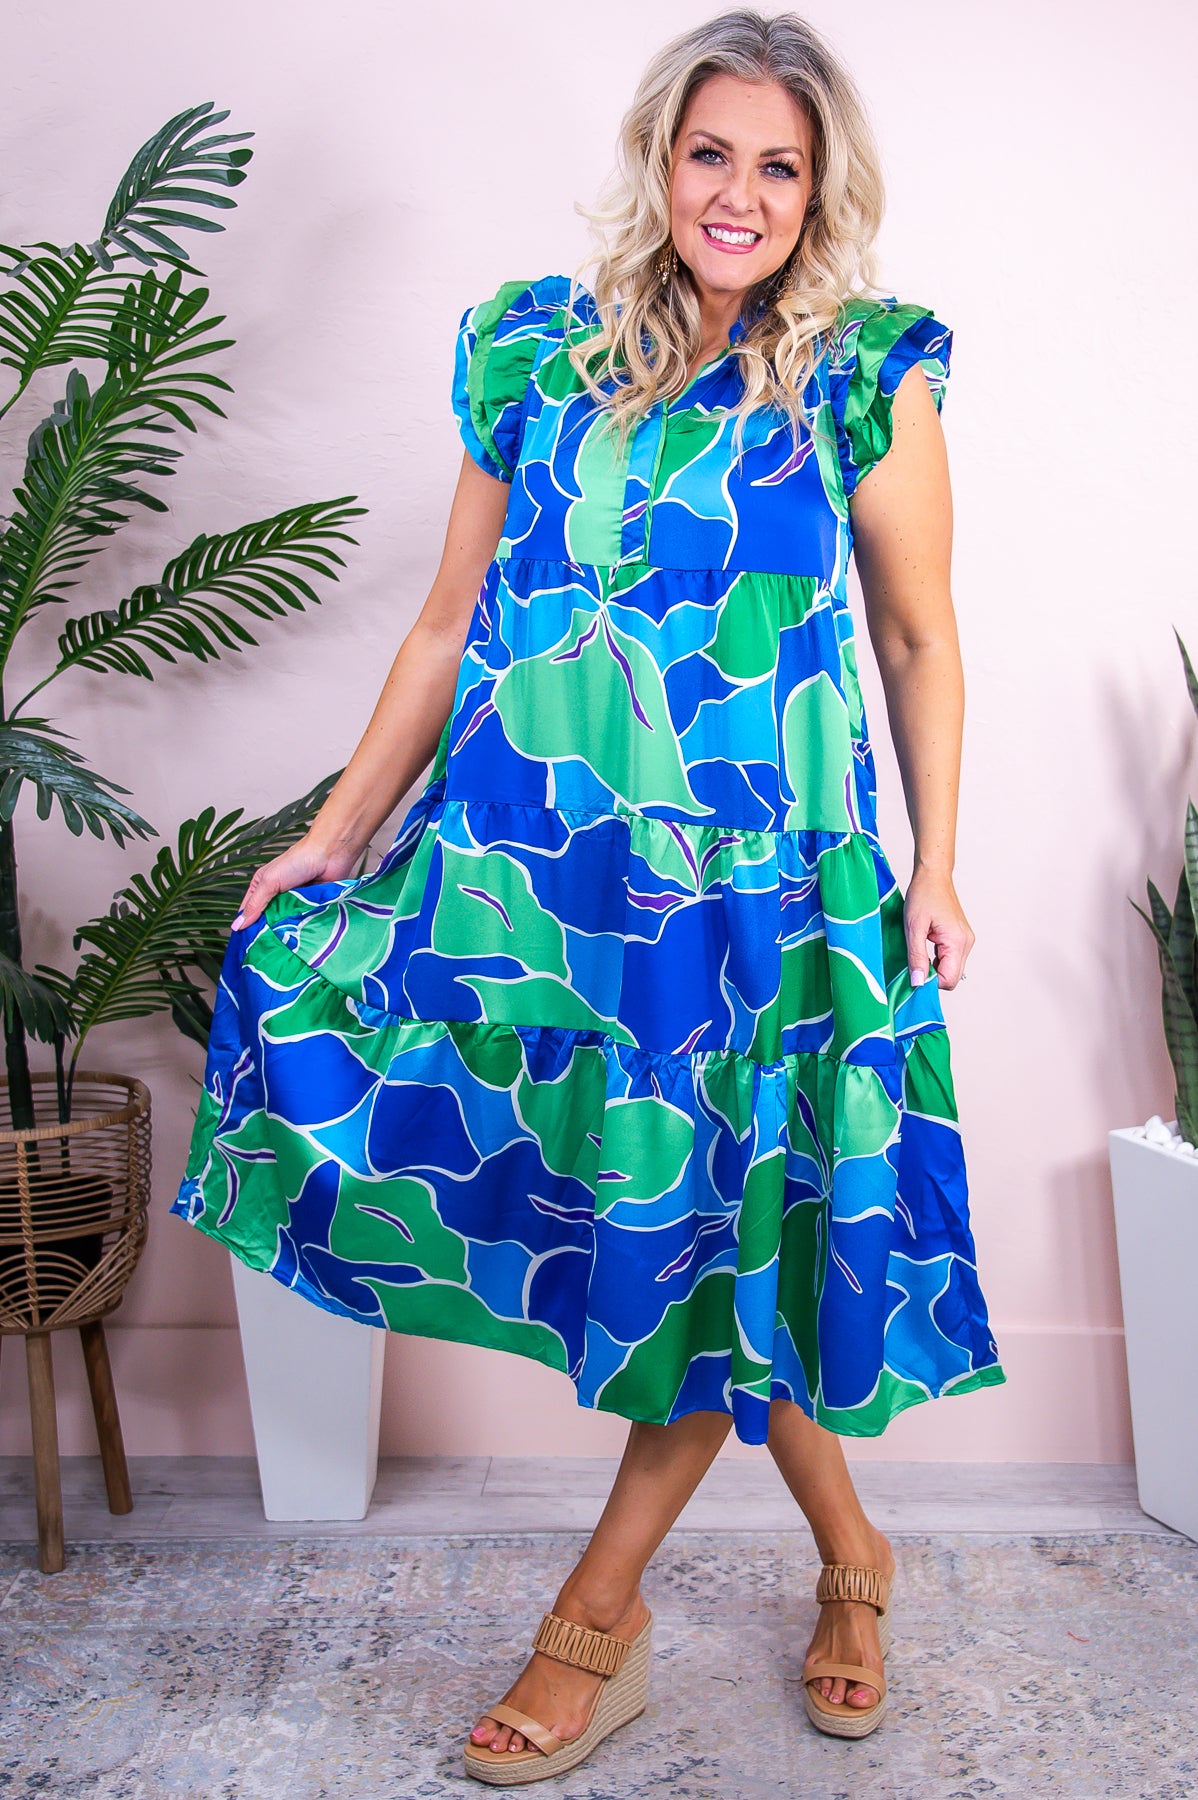 She's A Trend Setter Blue/Green Printed Maxi Dress - D5200BL